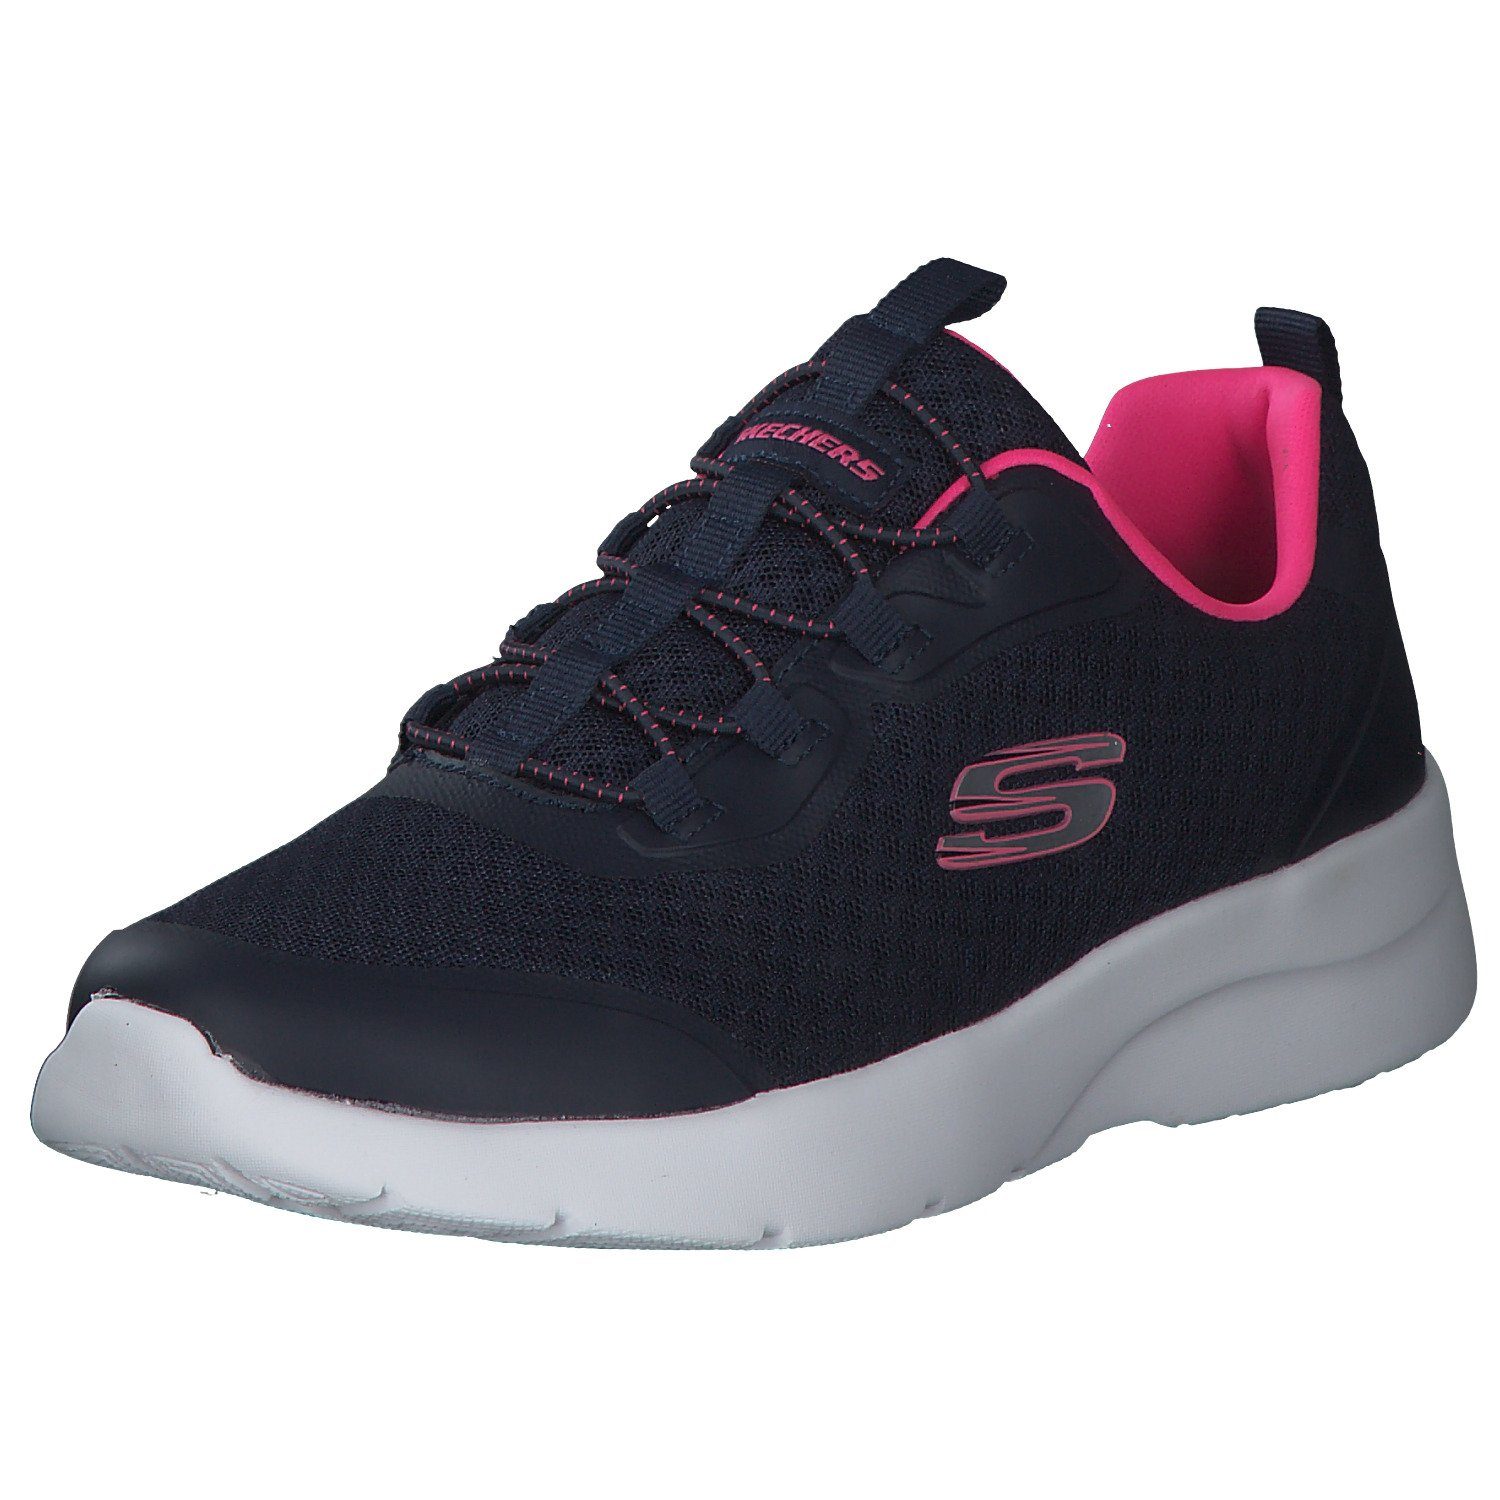 Skechers Skechers 149691 Sneaker NVHP navy hot pink (20202769)